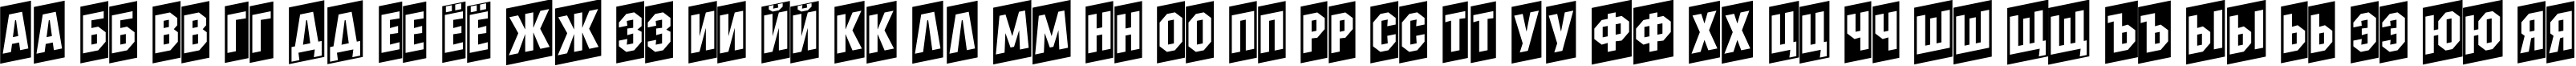 Пример написания русского алфавита шрифтом a_MachinaNovaCmUp